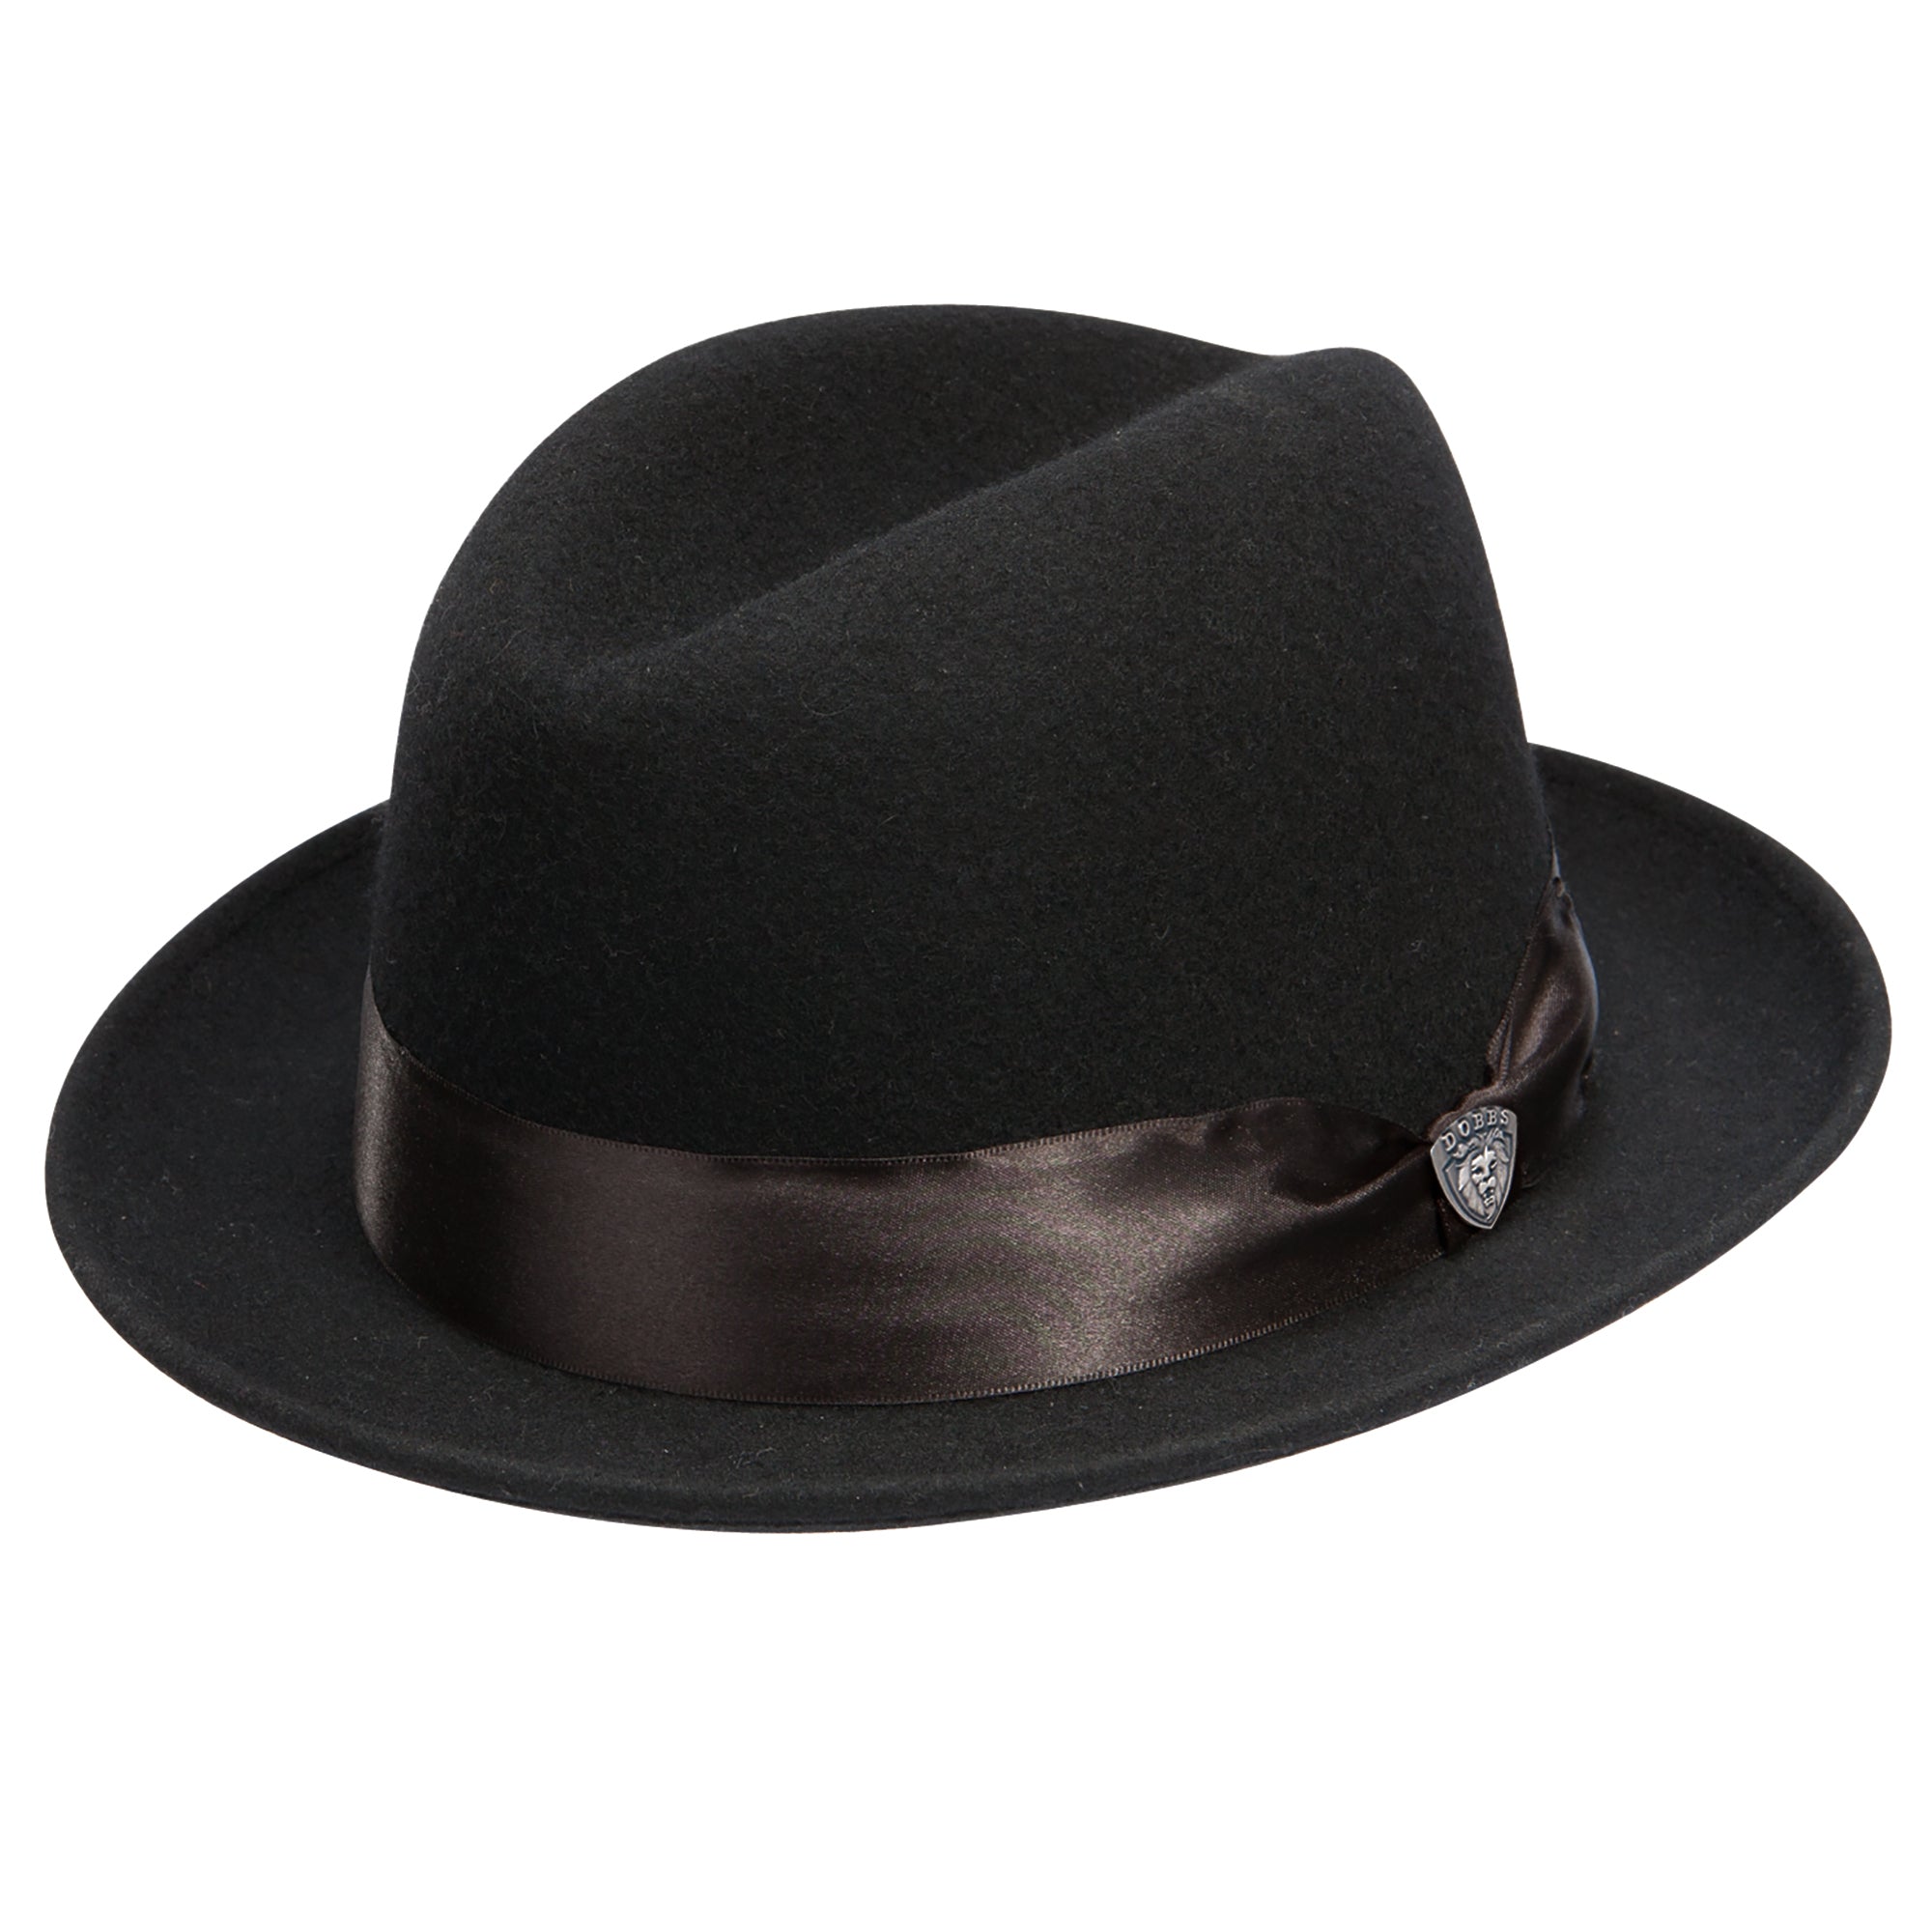 Dobbs Wool Felt Boulevard Fedora Hat in Black